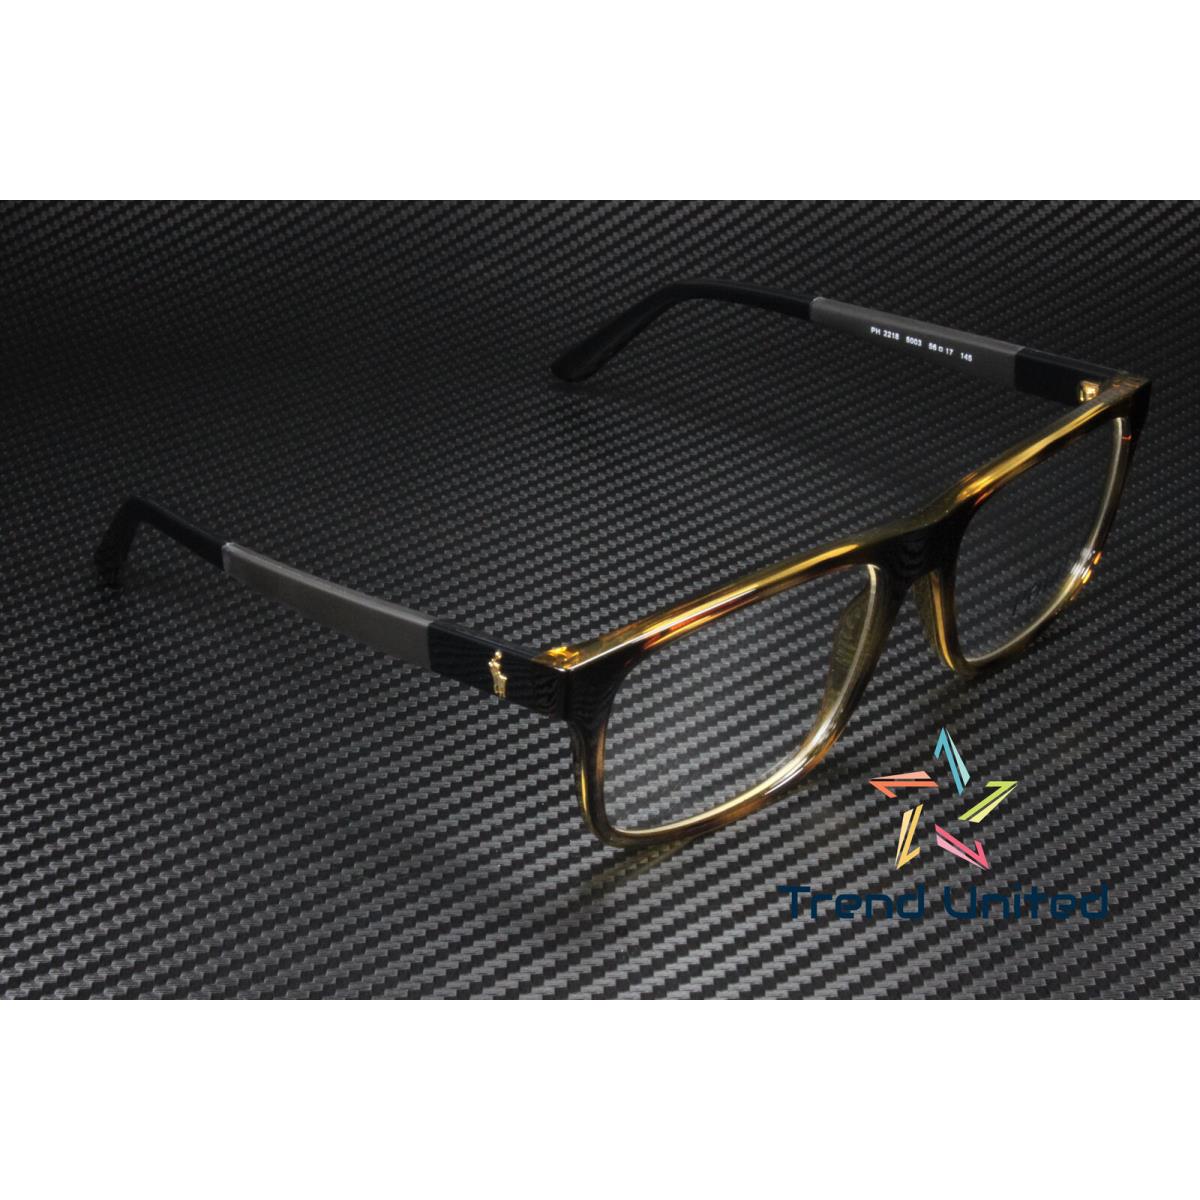 Ralph Lauren eyeglasses  - Brown Frame 0